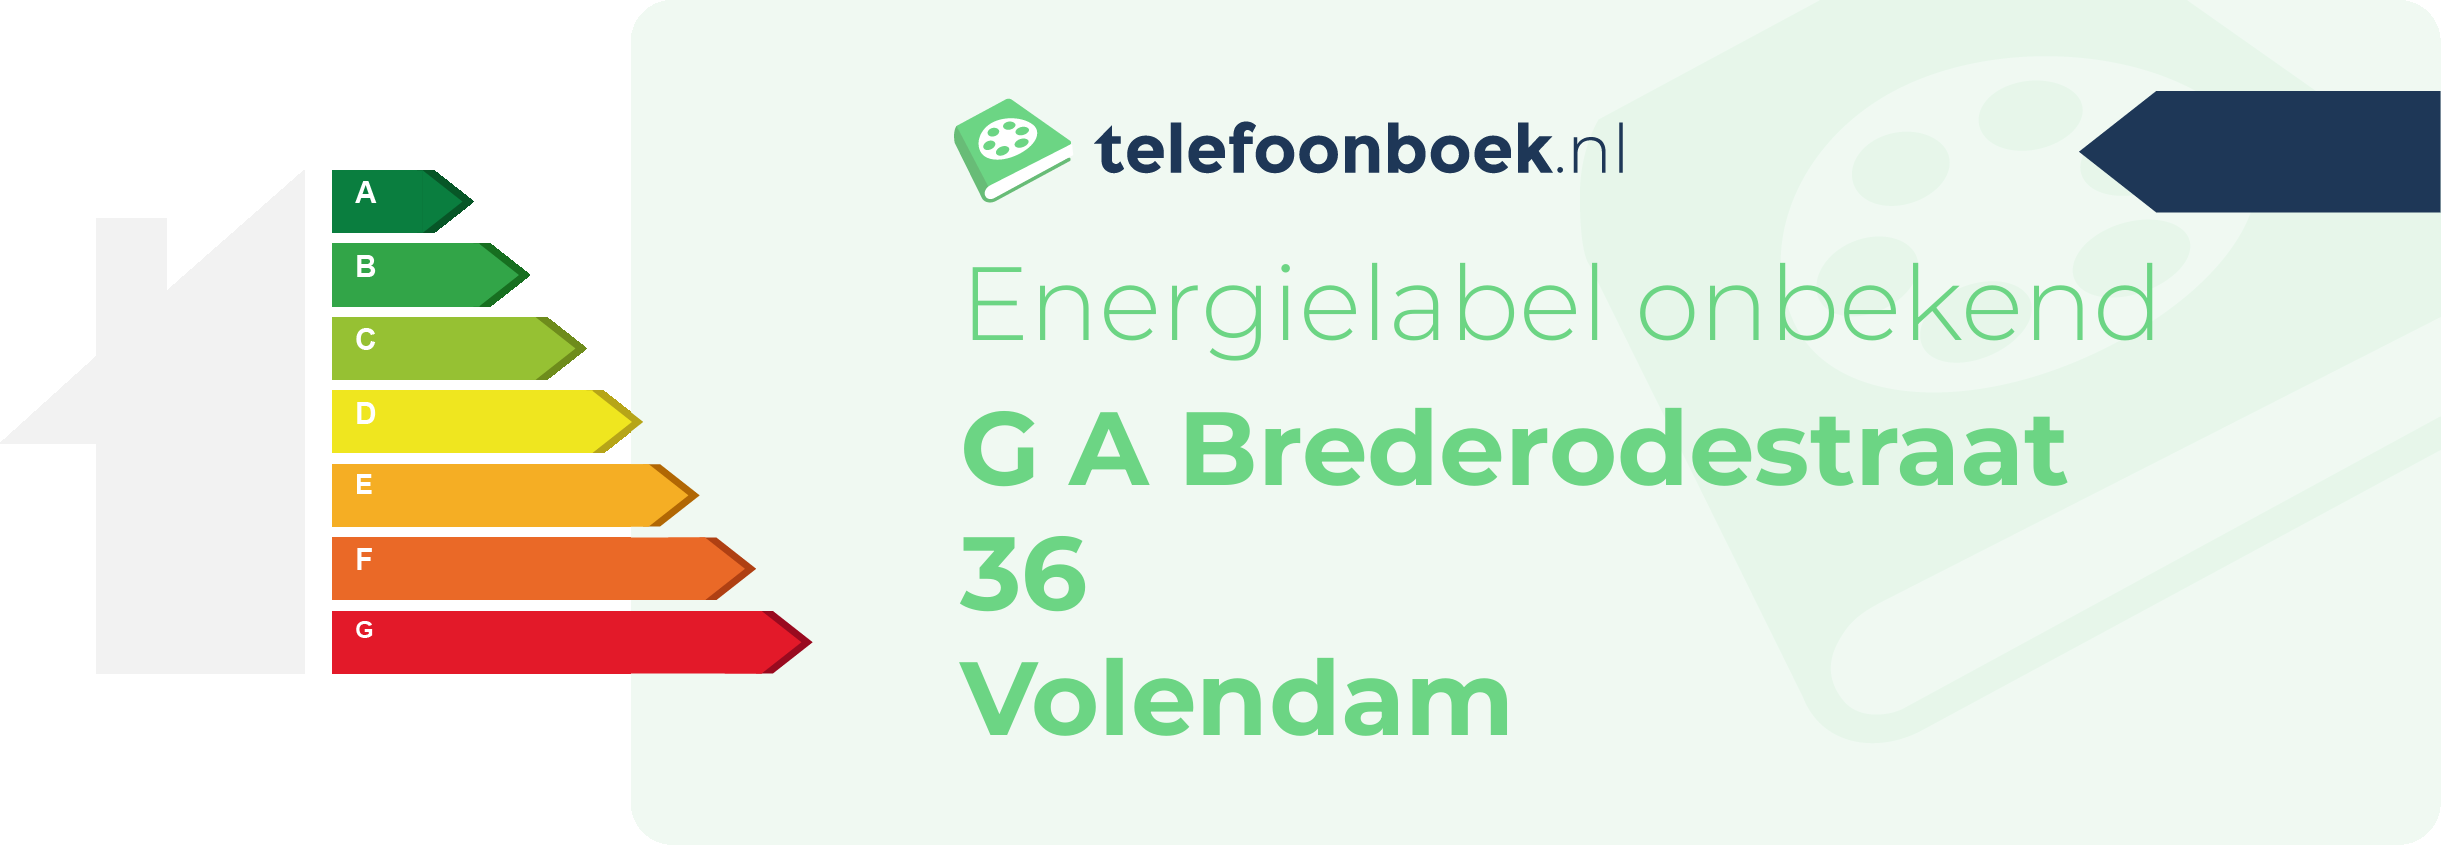 Energielabel G A Brederodestraat 36 Volendam